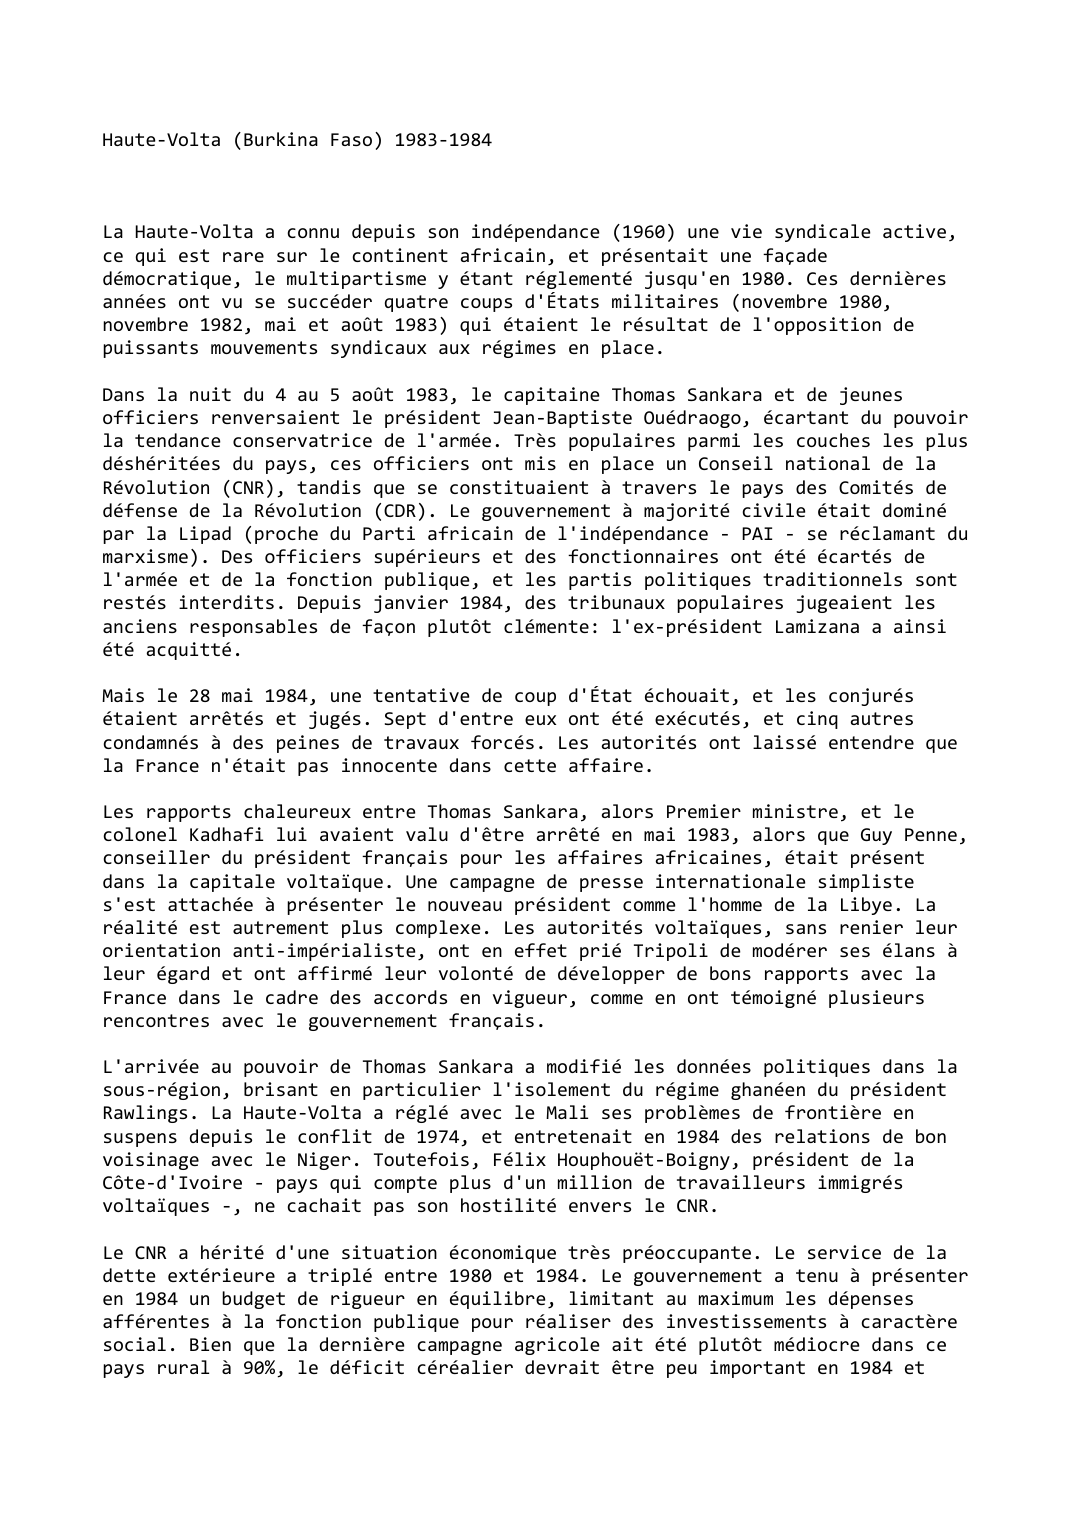 Prévisualisation du document Haute-Volta (Burkina Faso) - 1983-1984